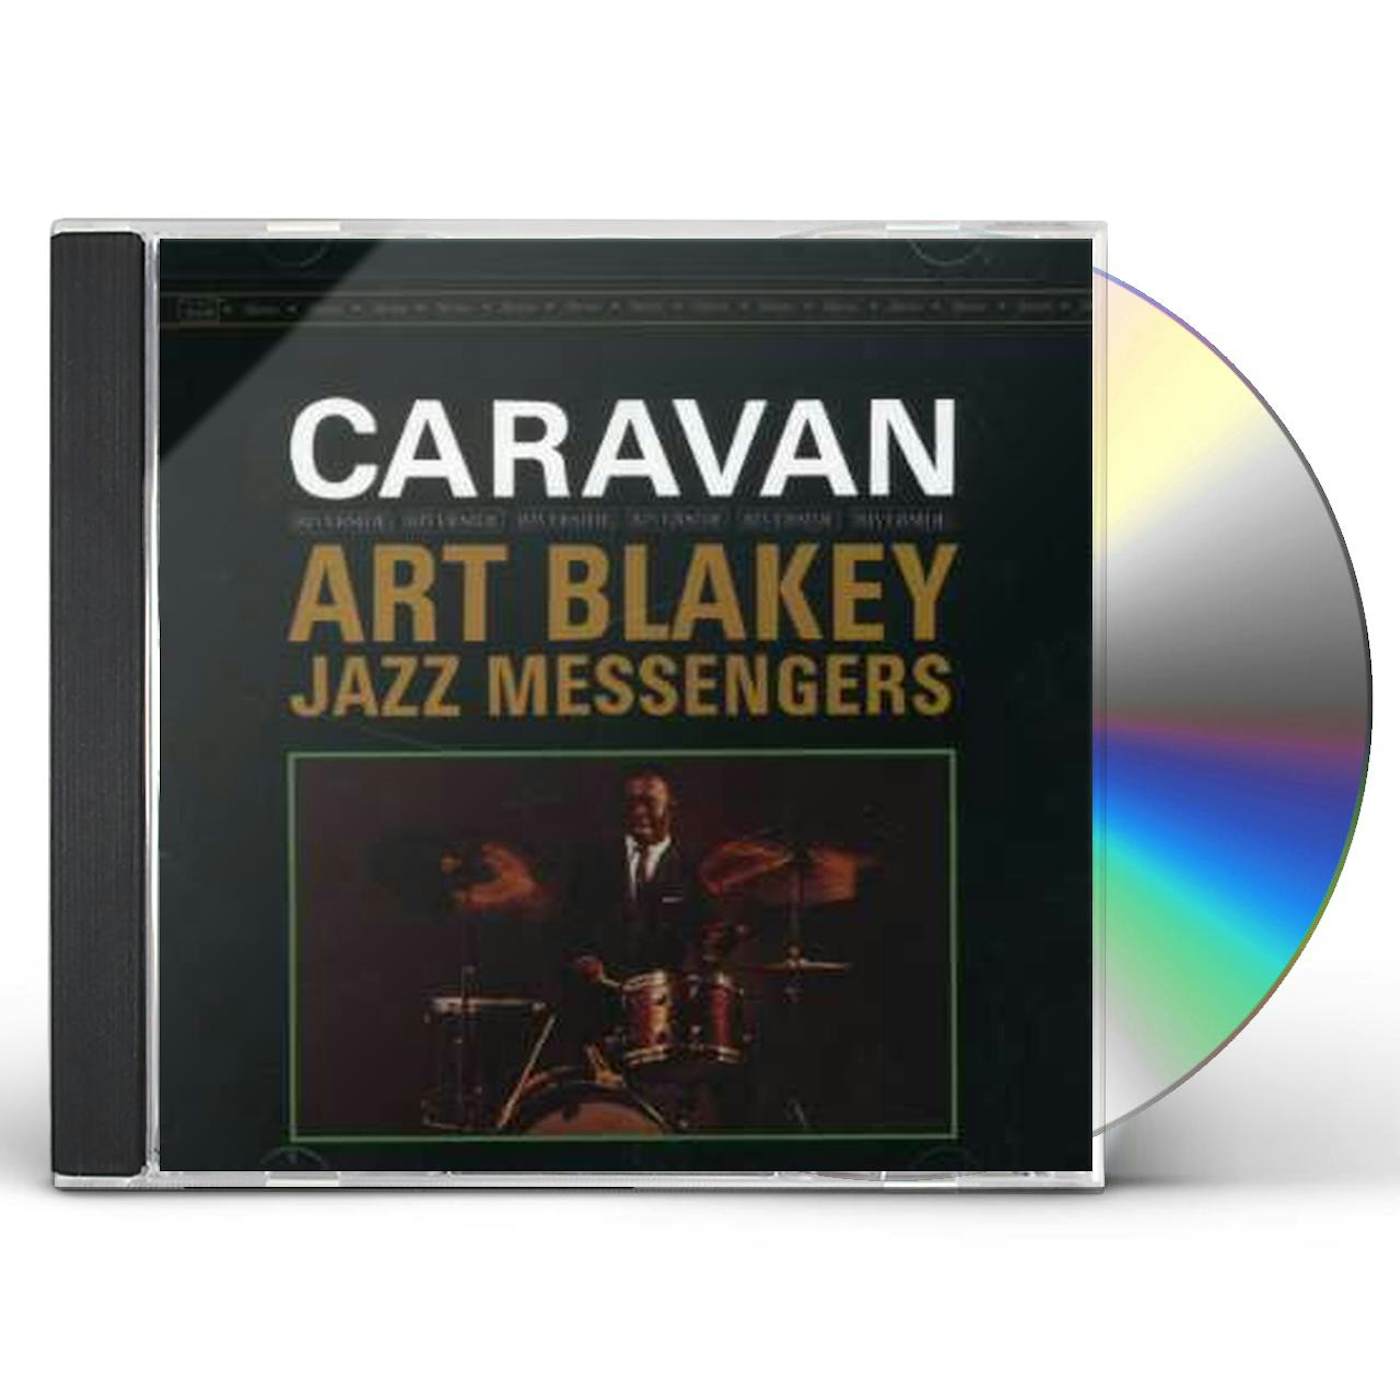 Art Blakey & The Jazz Messengers CARAVAN: KEEPNEWS COLLECTION CD